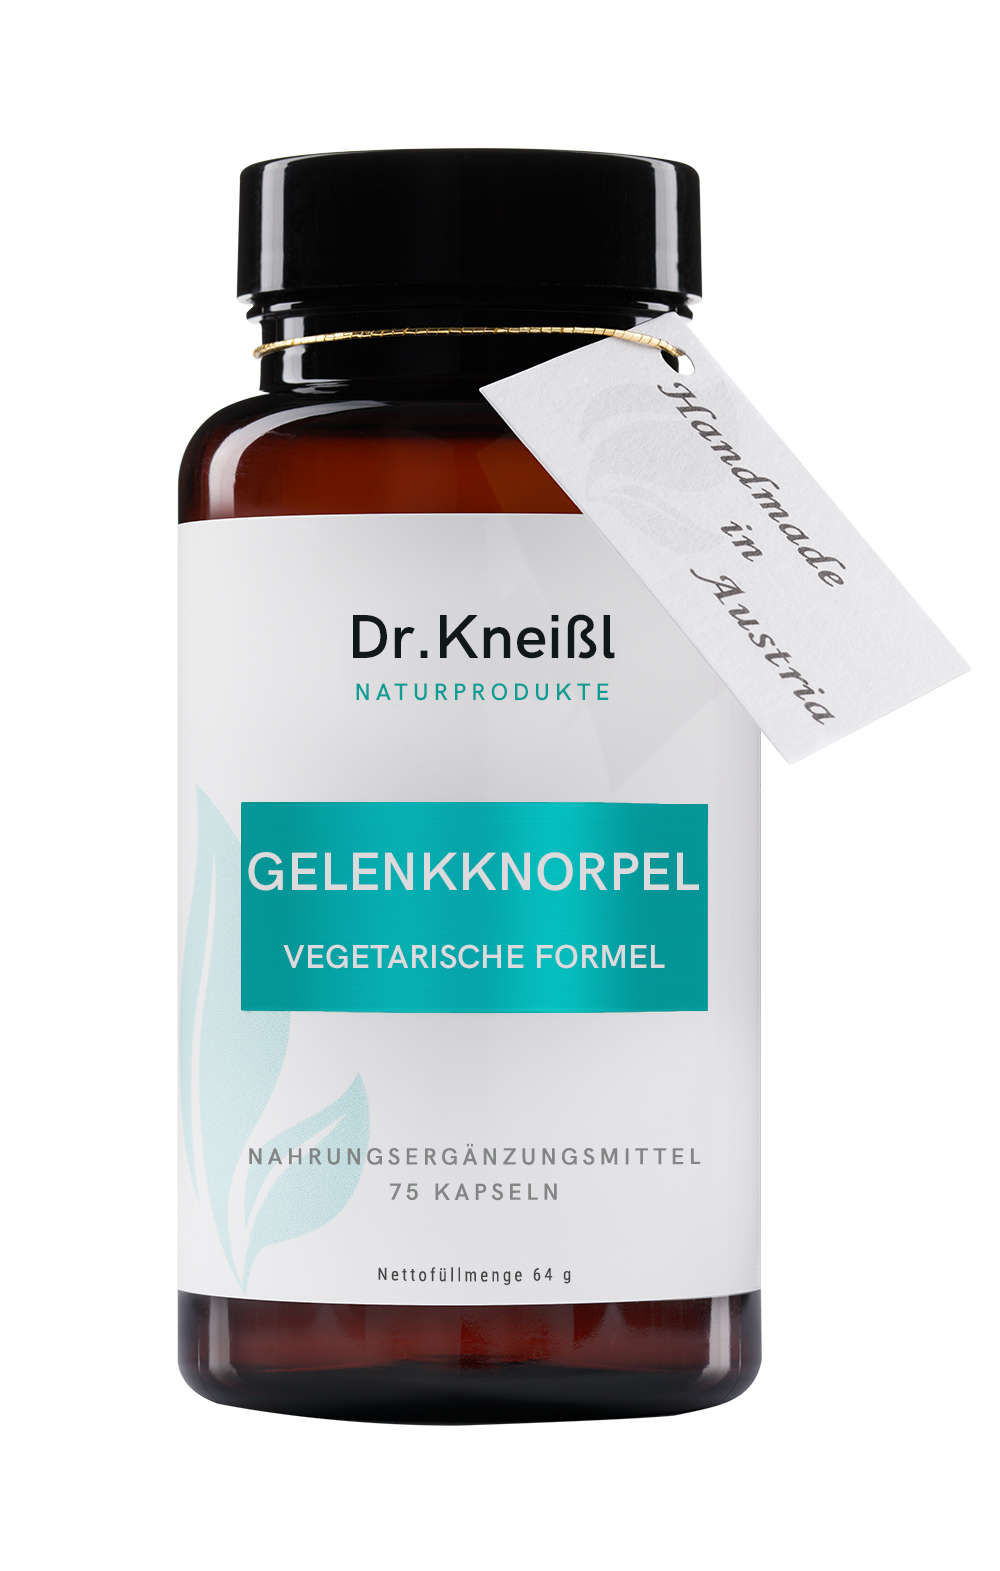 Dr. Kneißl Vitalstoffe: Gelenkknorpel